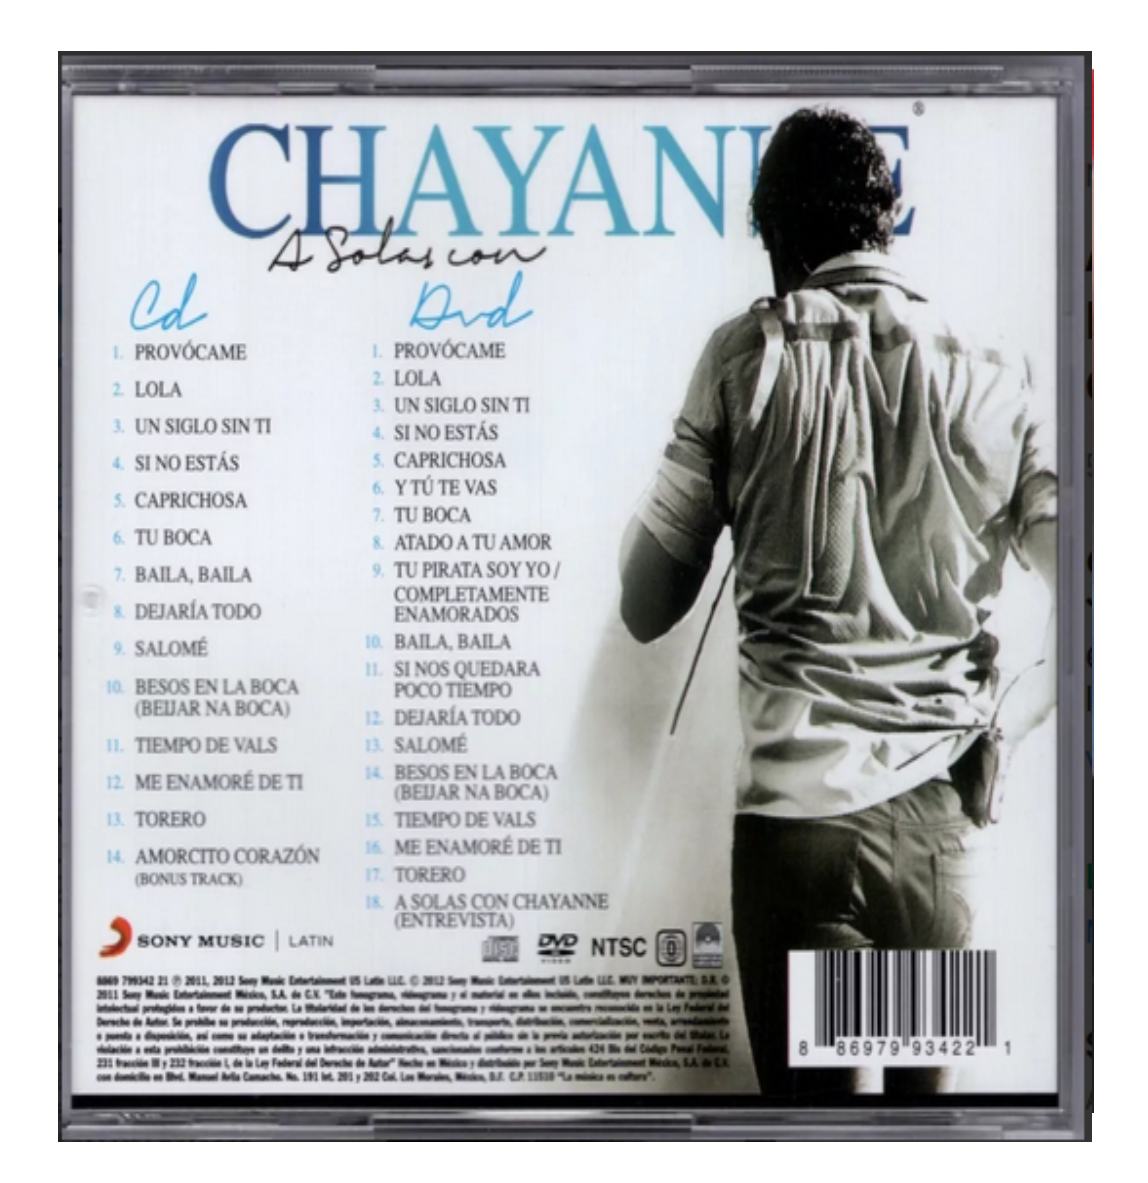 A Solas Con Chayanne Disco Cd + Dvd